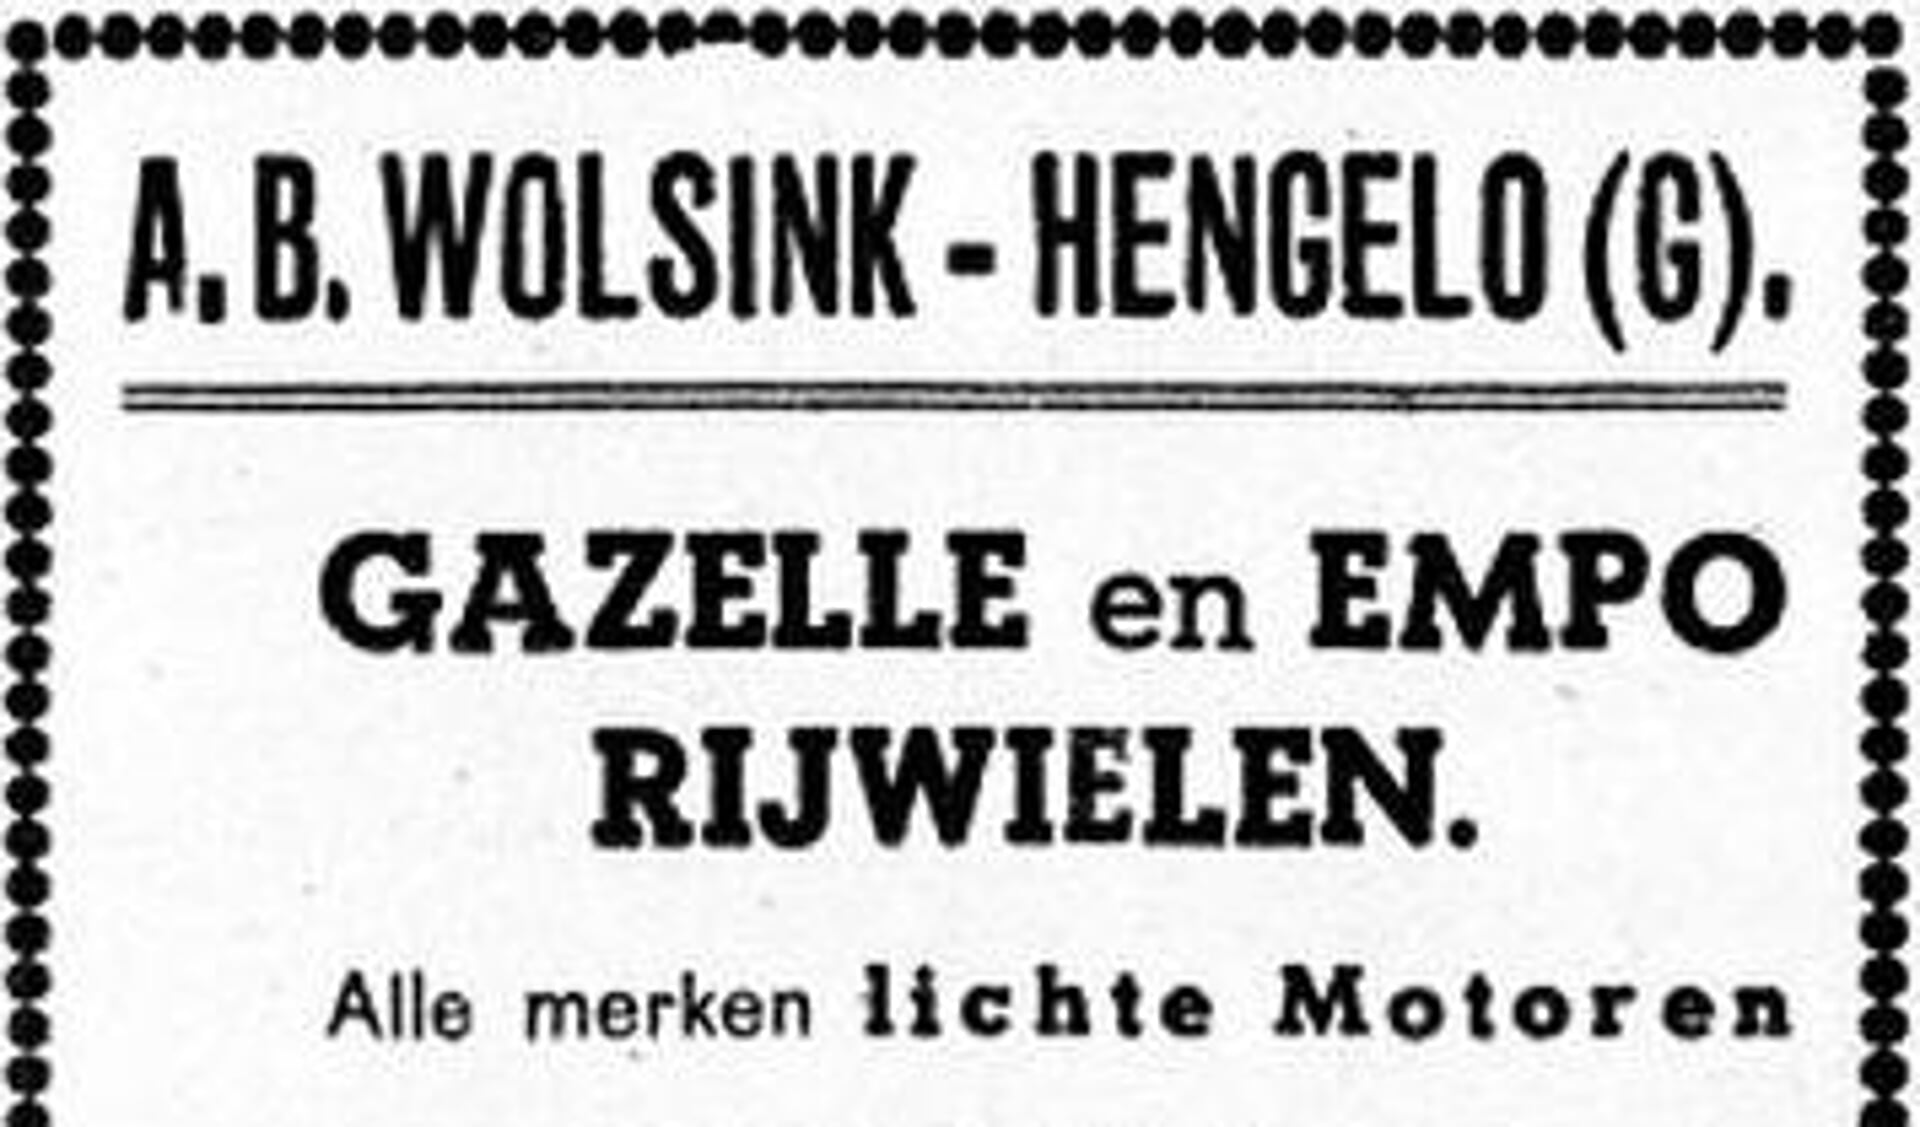 Advertentie Nölle Wolsink, april 1941. Foto: Archief Willy Hermans